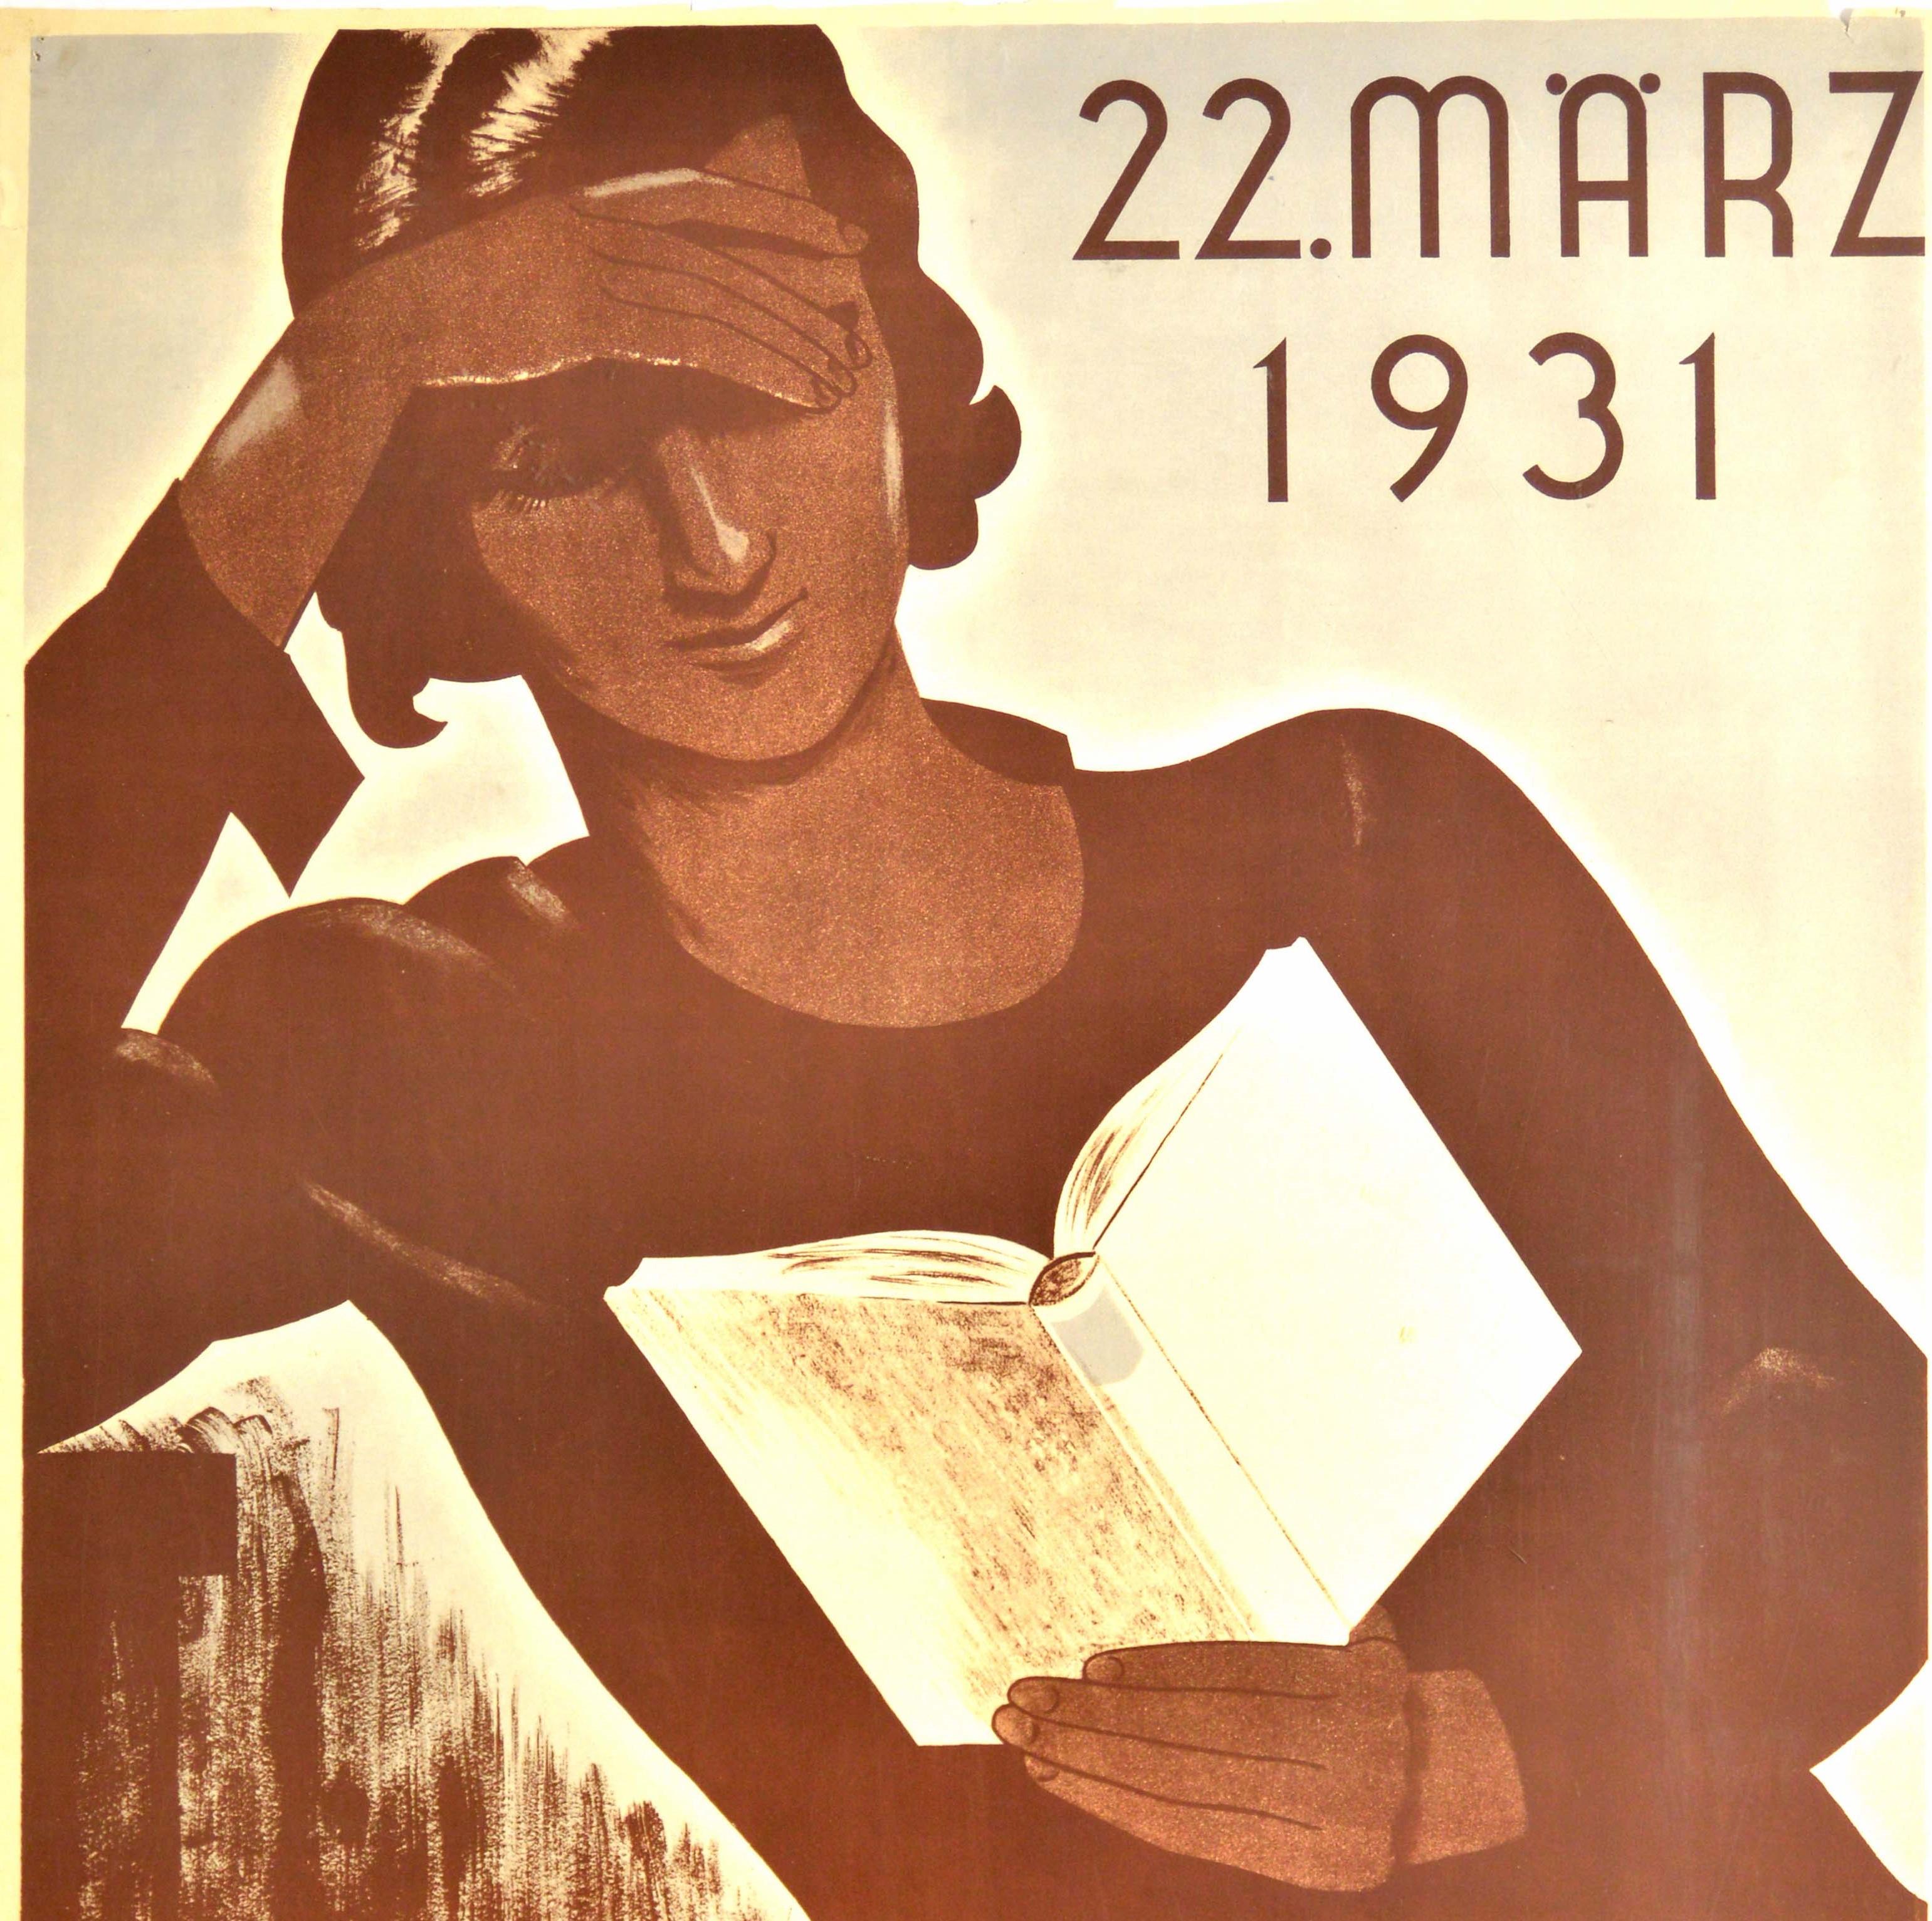 Original Vintage Poster Frau Und Buch Lady Reading A Book Art Deco 22 March 1931 - Print by Tibo